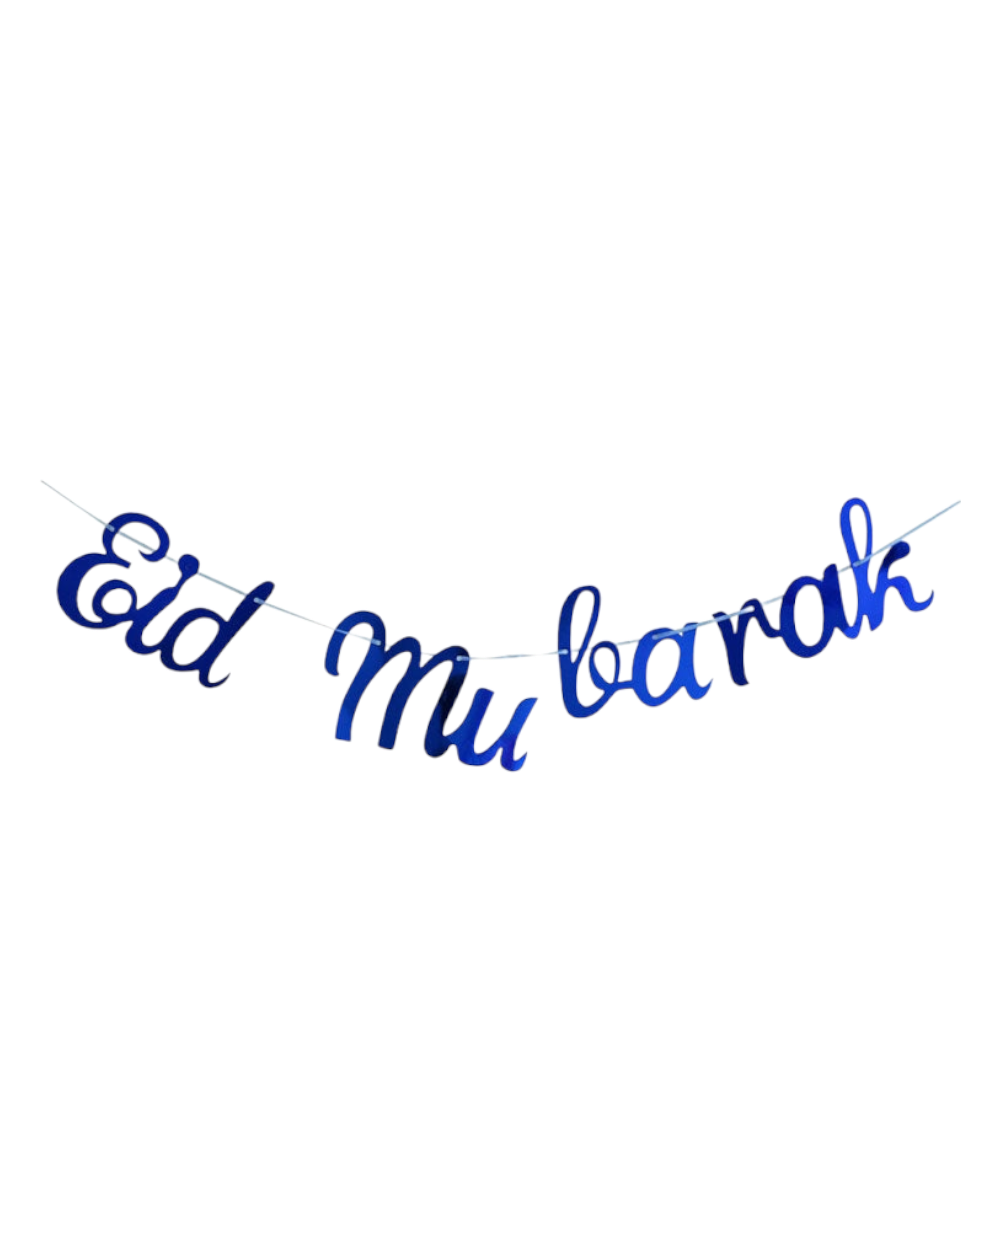 Shiny Eid Mubarak Banner - Blue